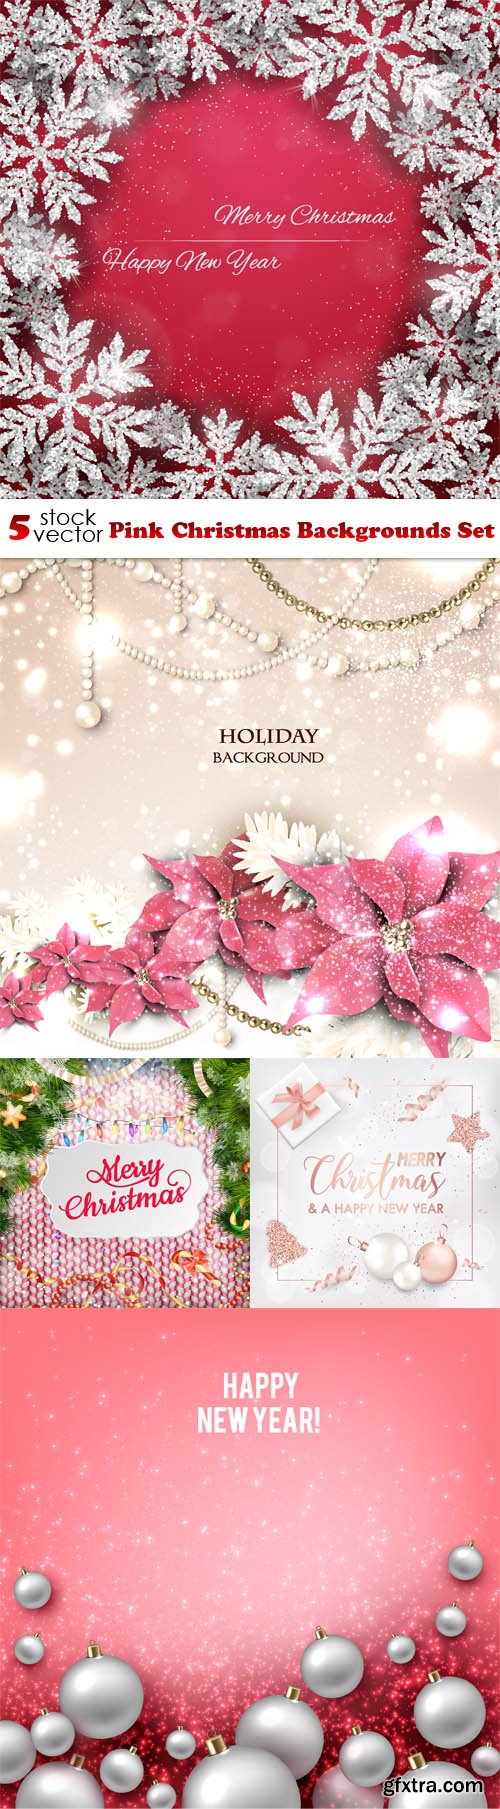 Vectors - Pink Christmas Backgrounds Set